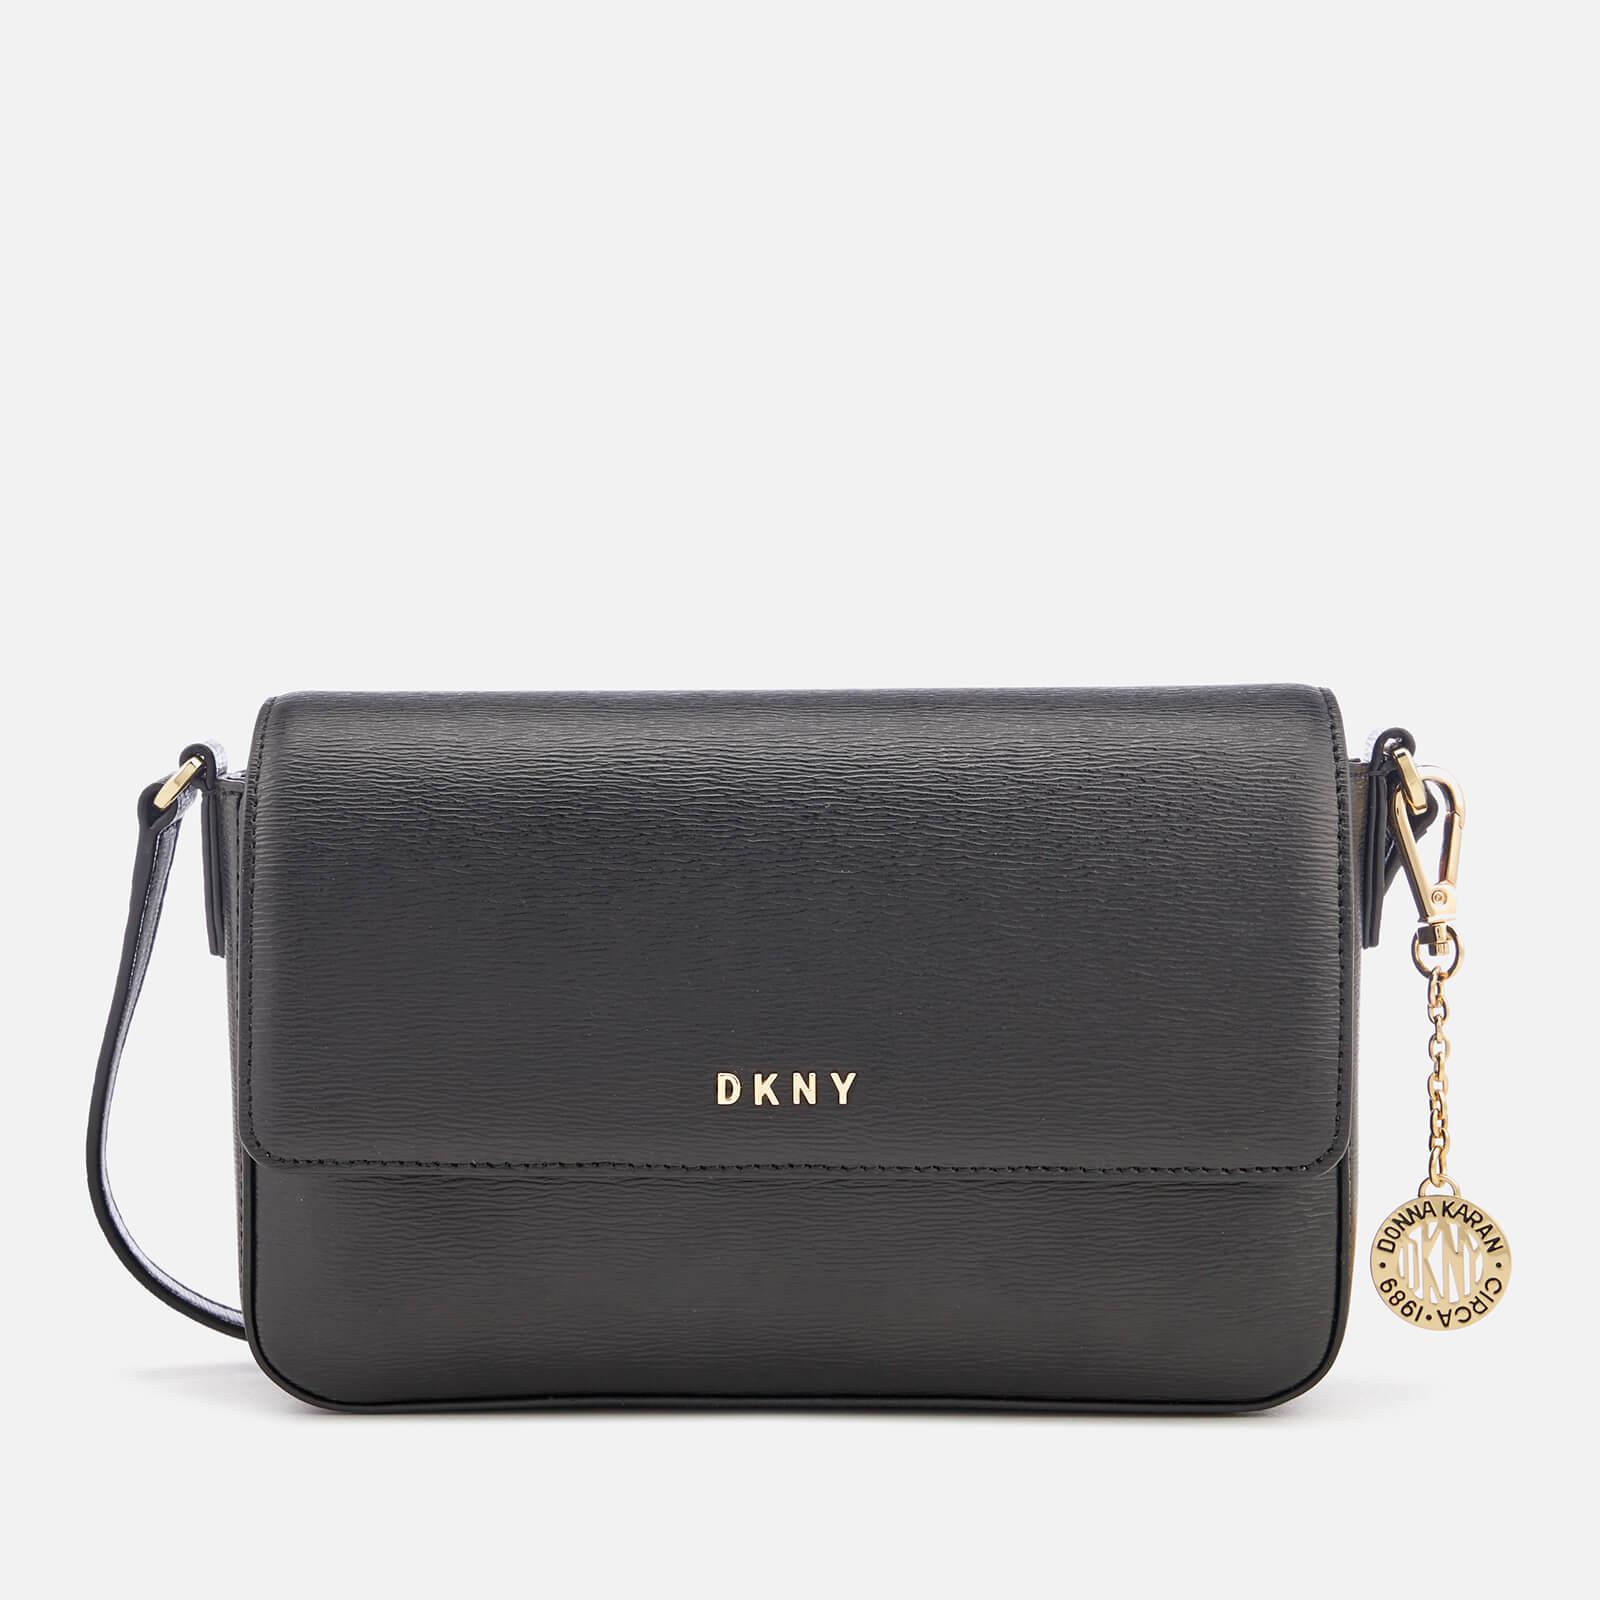 DKNY Bryant Medium Sutton Textured Leather Flap Cross Body Bag in Black |  Lyst